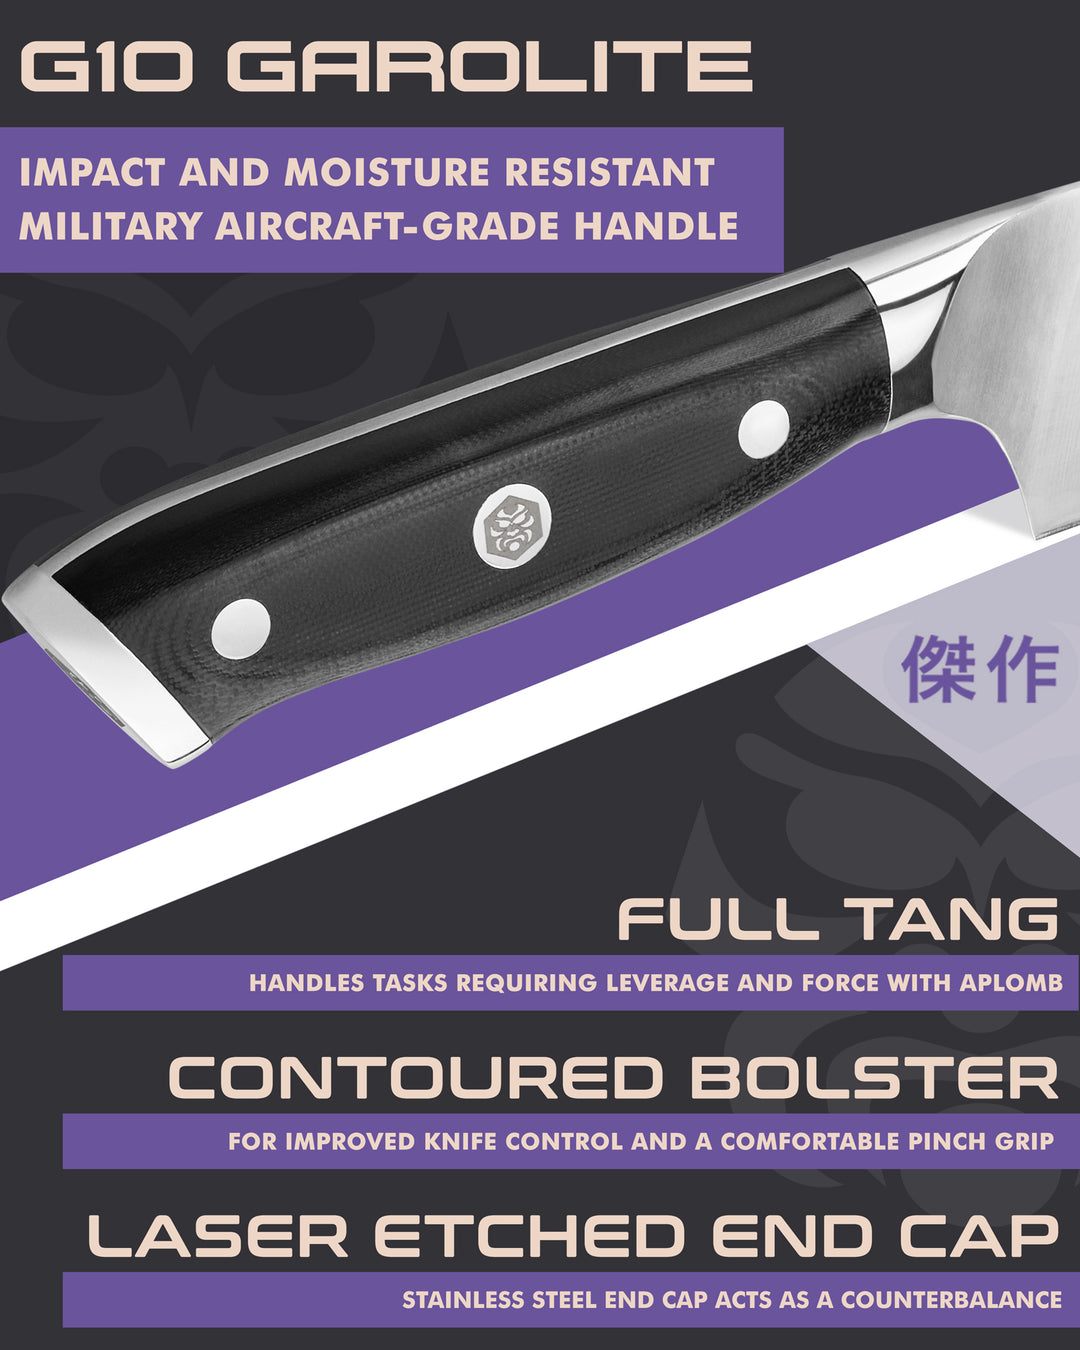 Kessaku Dynasty Santoku Knife handle features: G10 handle, full tang, contoured bolster, laser etched end cap